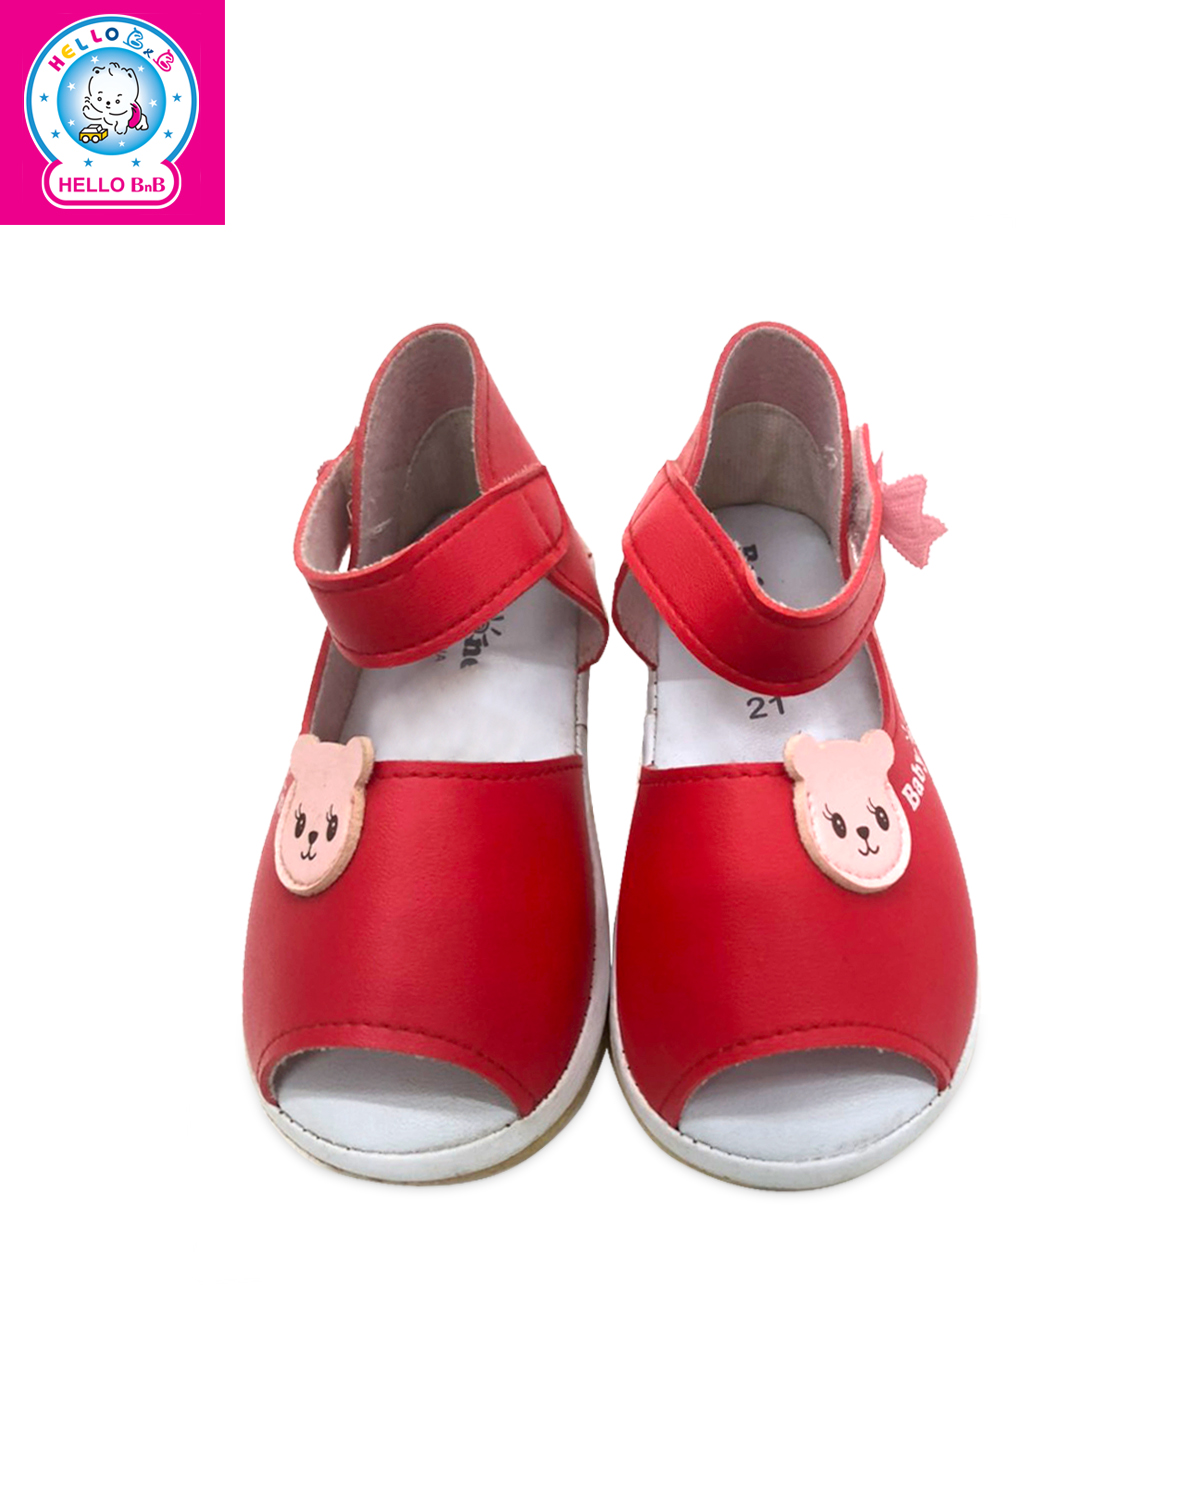 Giày sandal BabyOne 0812 size 21 Red